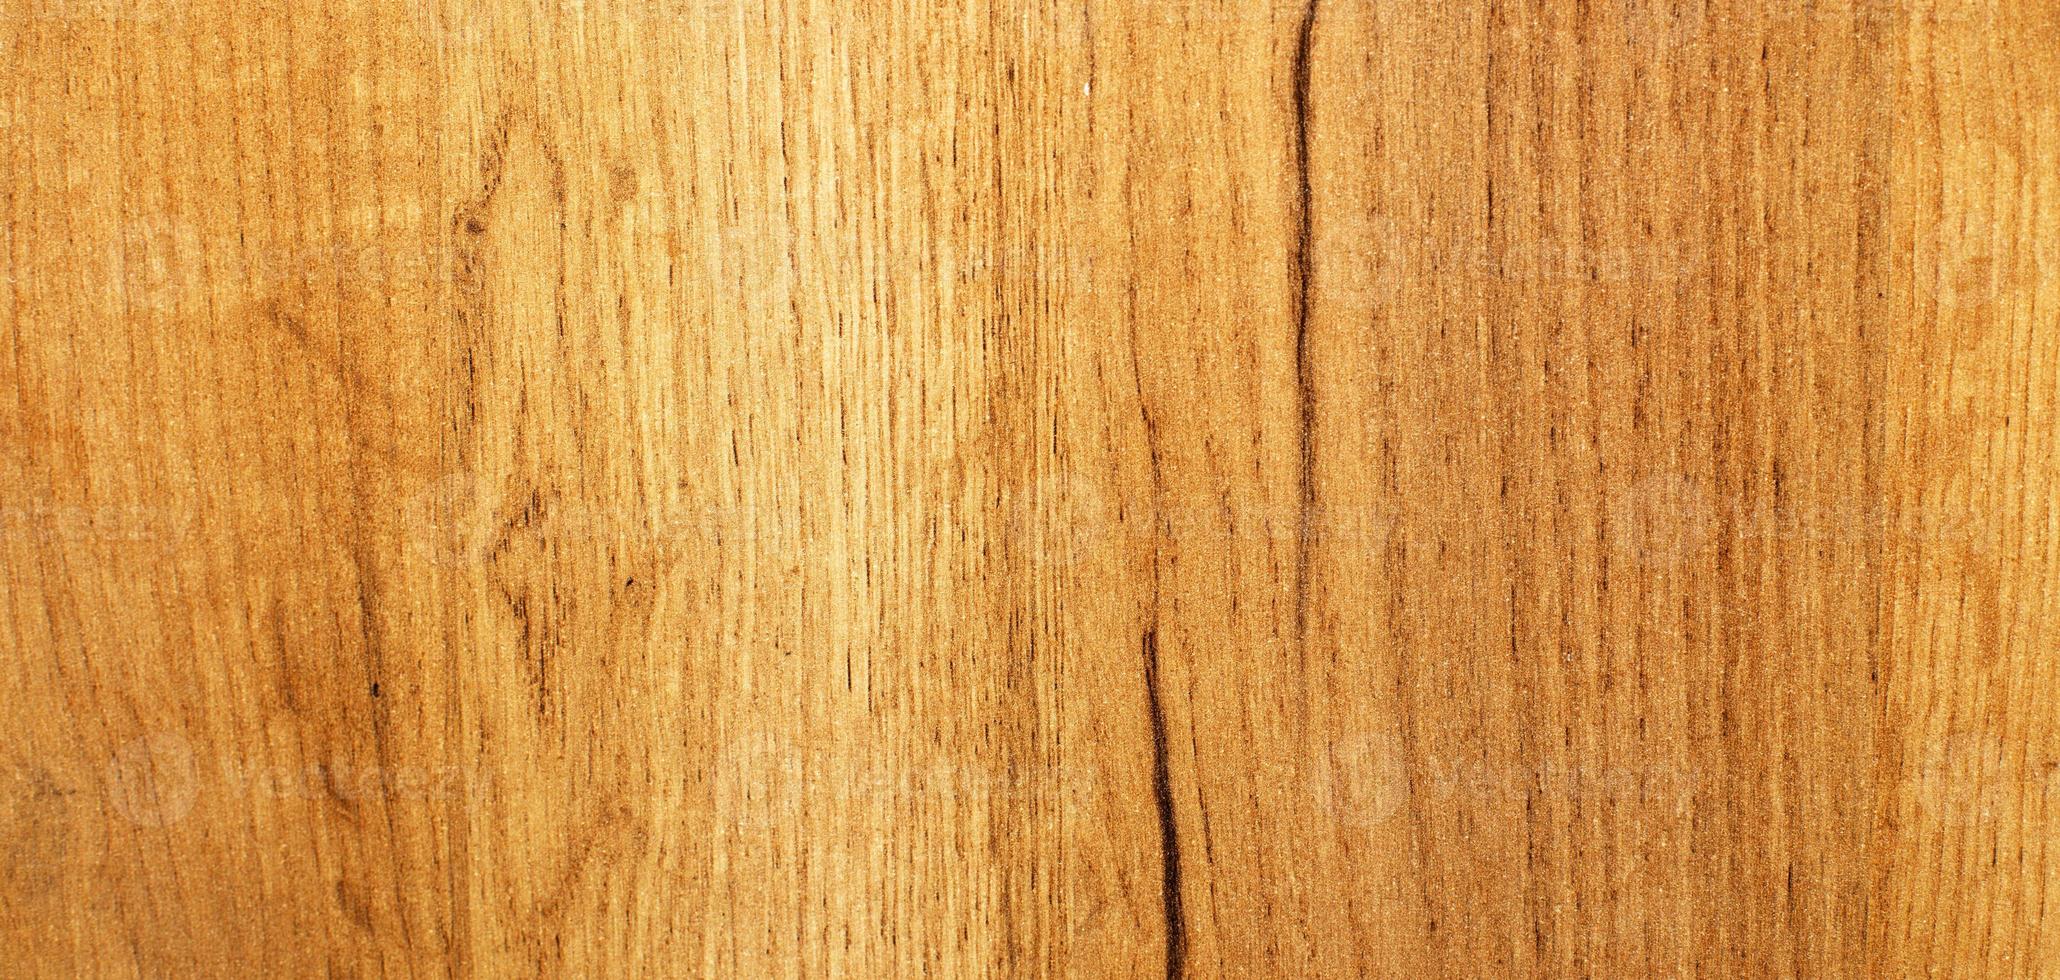 fundo de textura de madeira. vista superior da mesa de madeira com rachaduras. bandeira foto